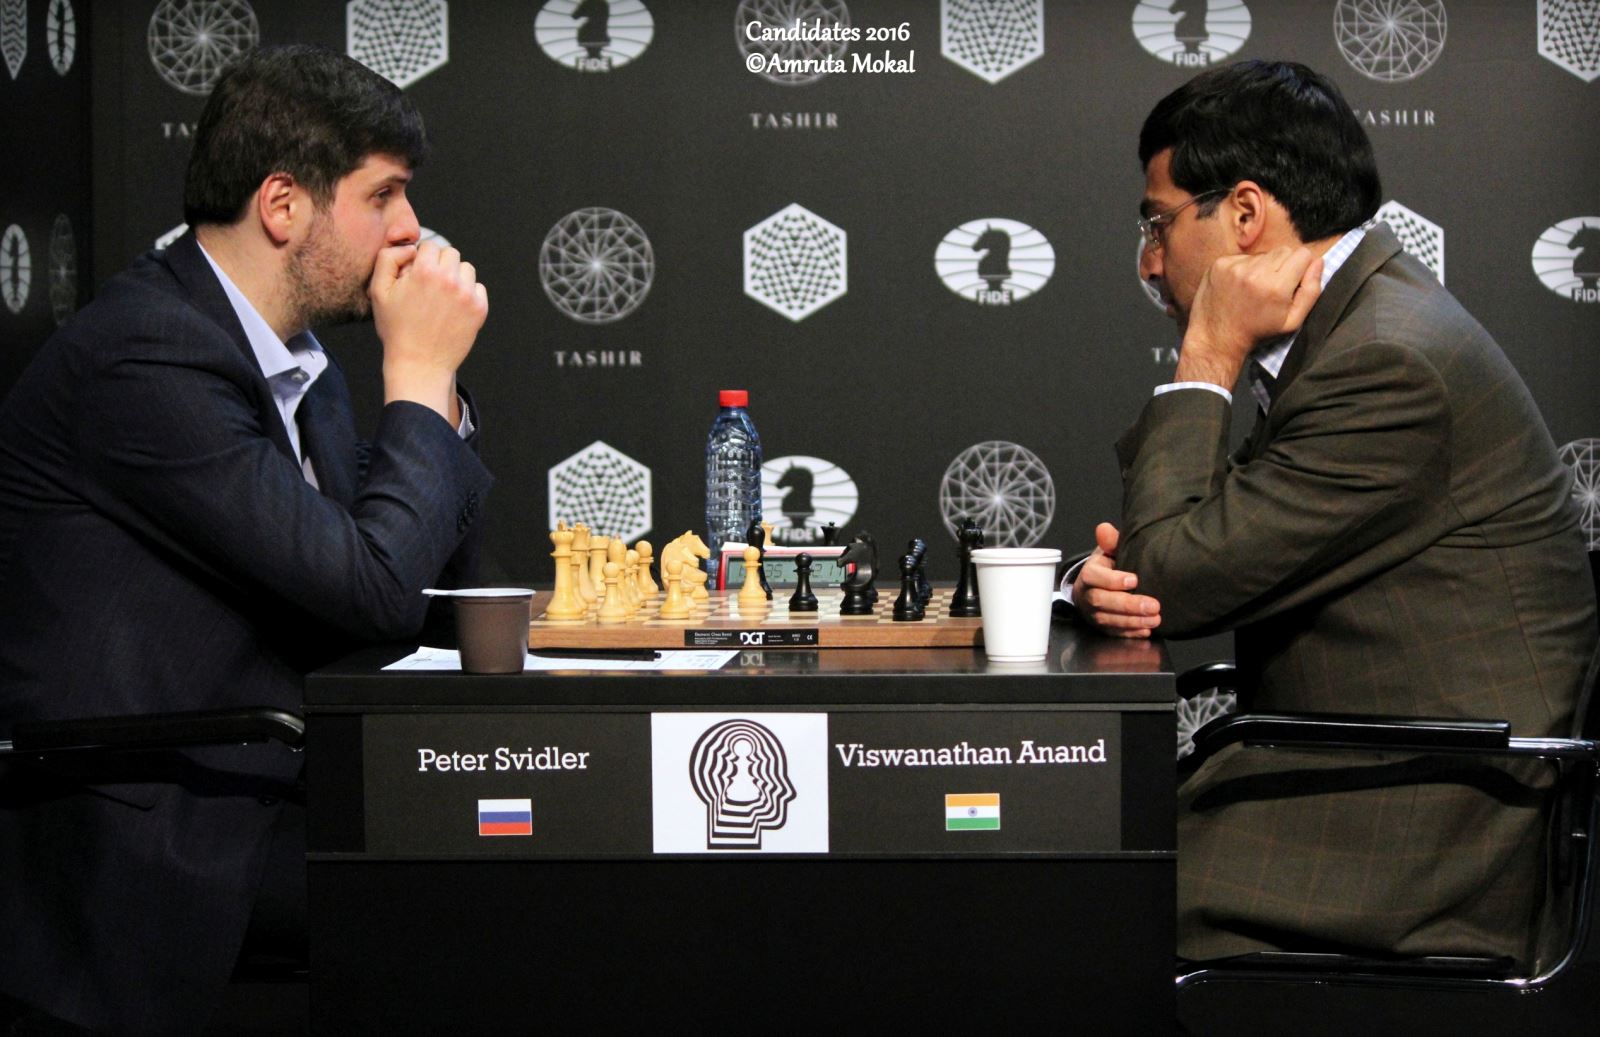 Viswanathan Anand draws with Svidler; Sergey Karjakin new challenger